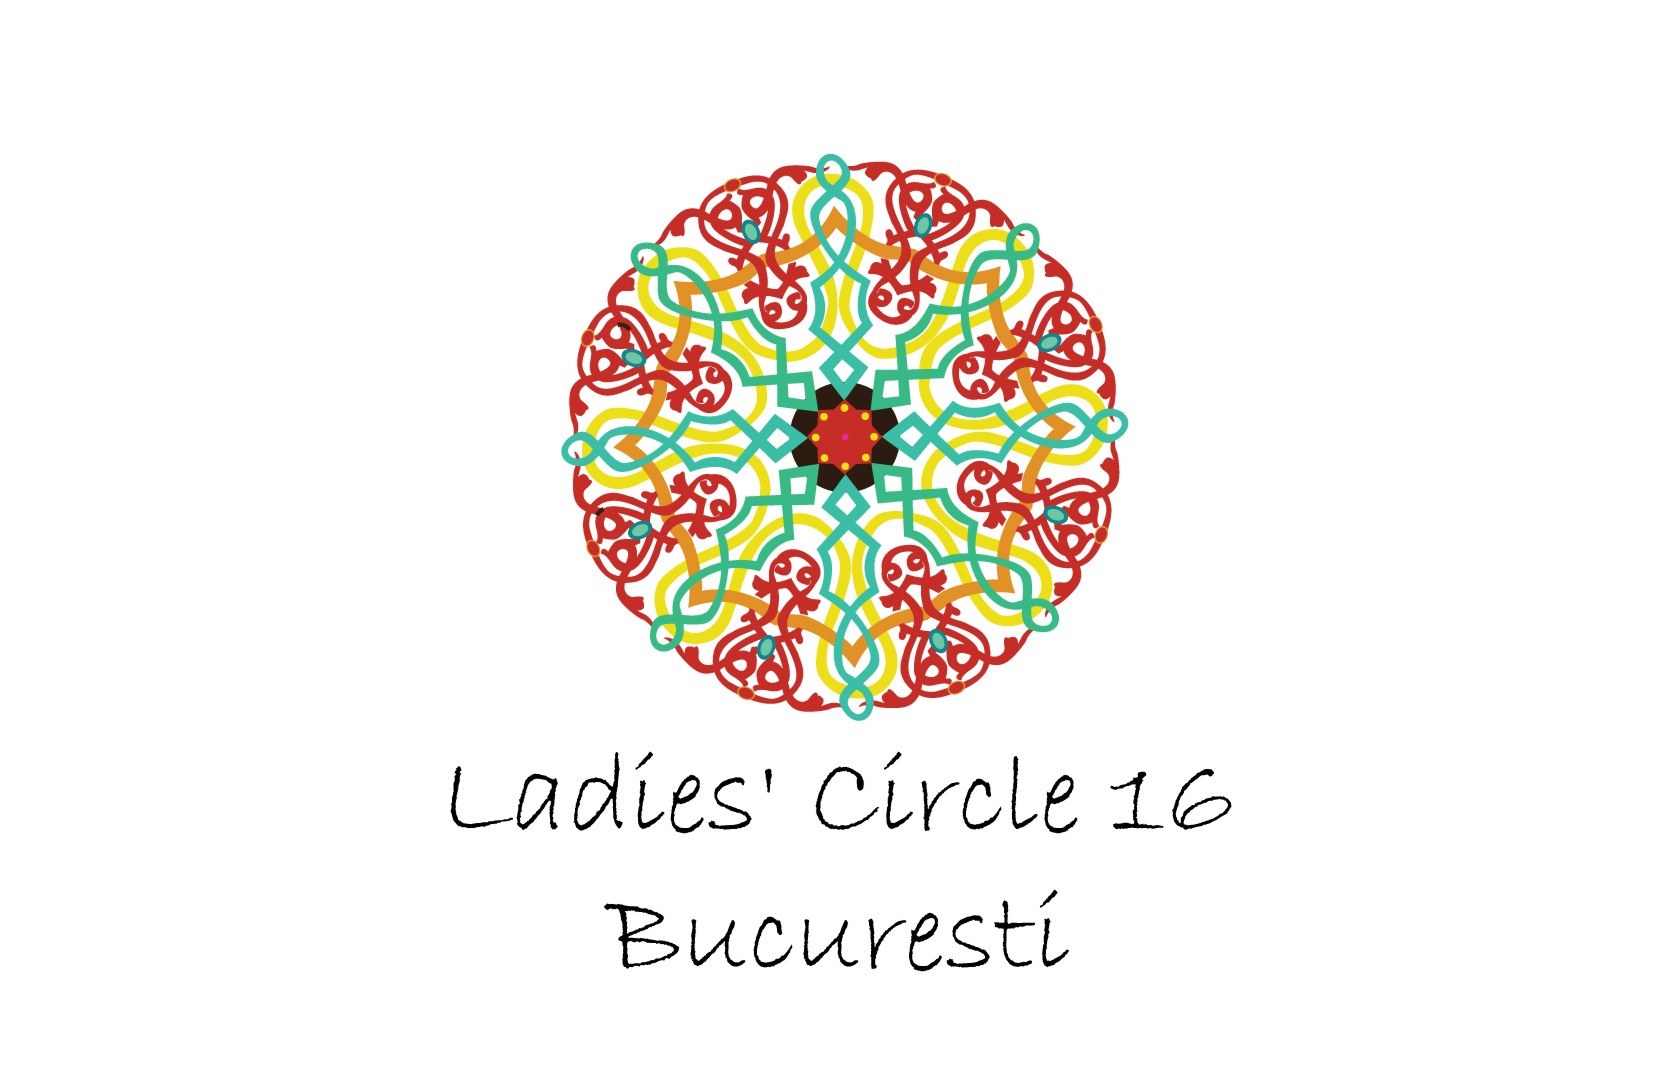 Ladies Circle Nr. 16 Bucuresti logo